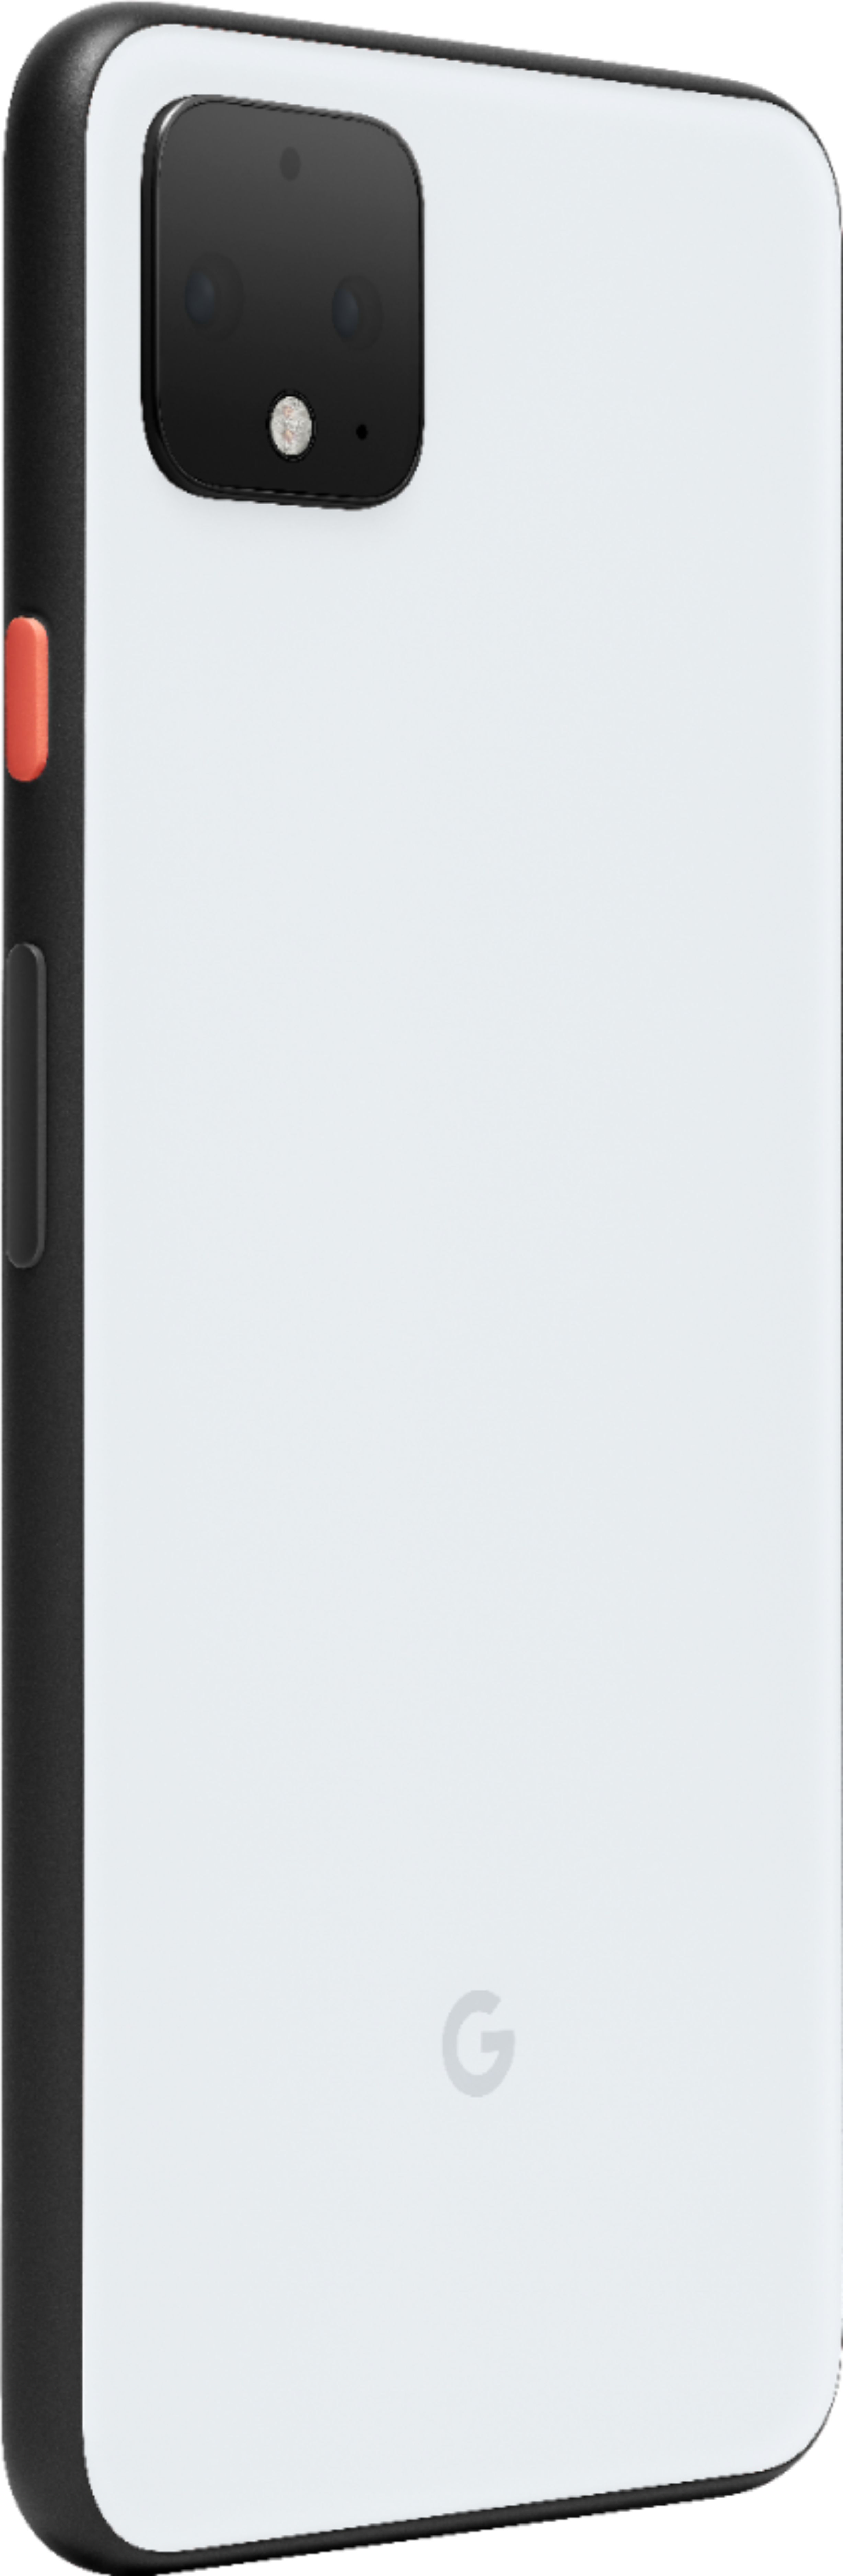 Best Buy: Google Pixel 4 XL 64GB Clearly White (Verizon) GA01201-US